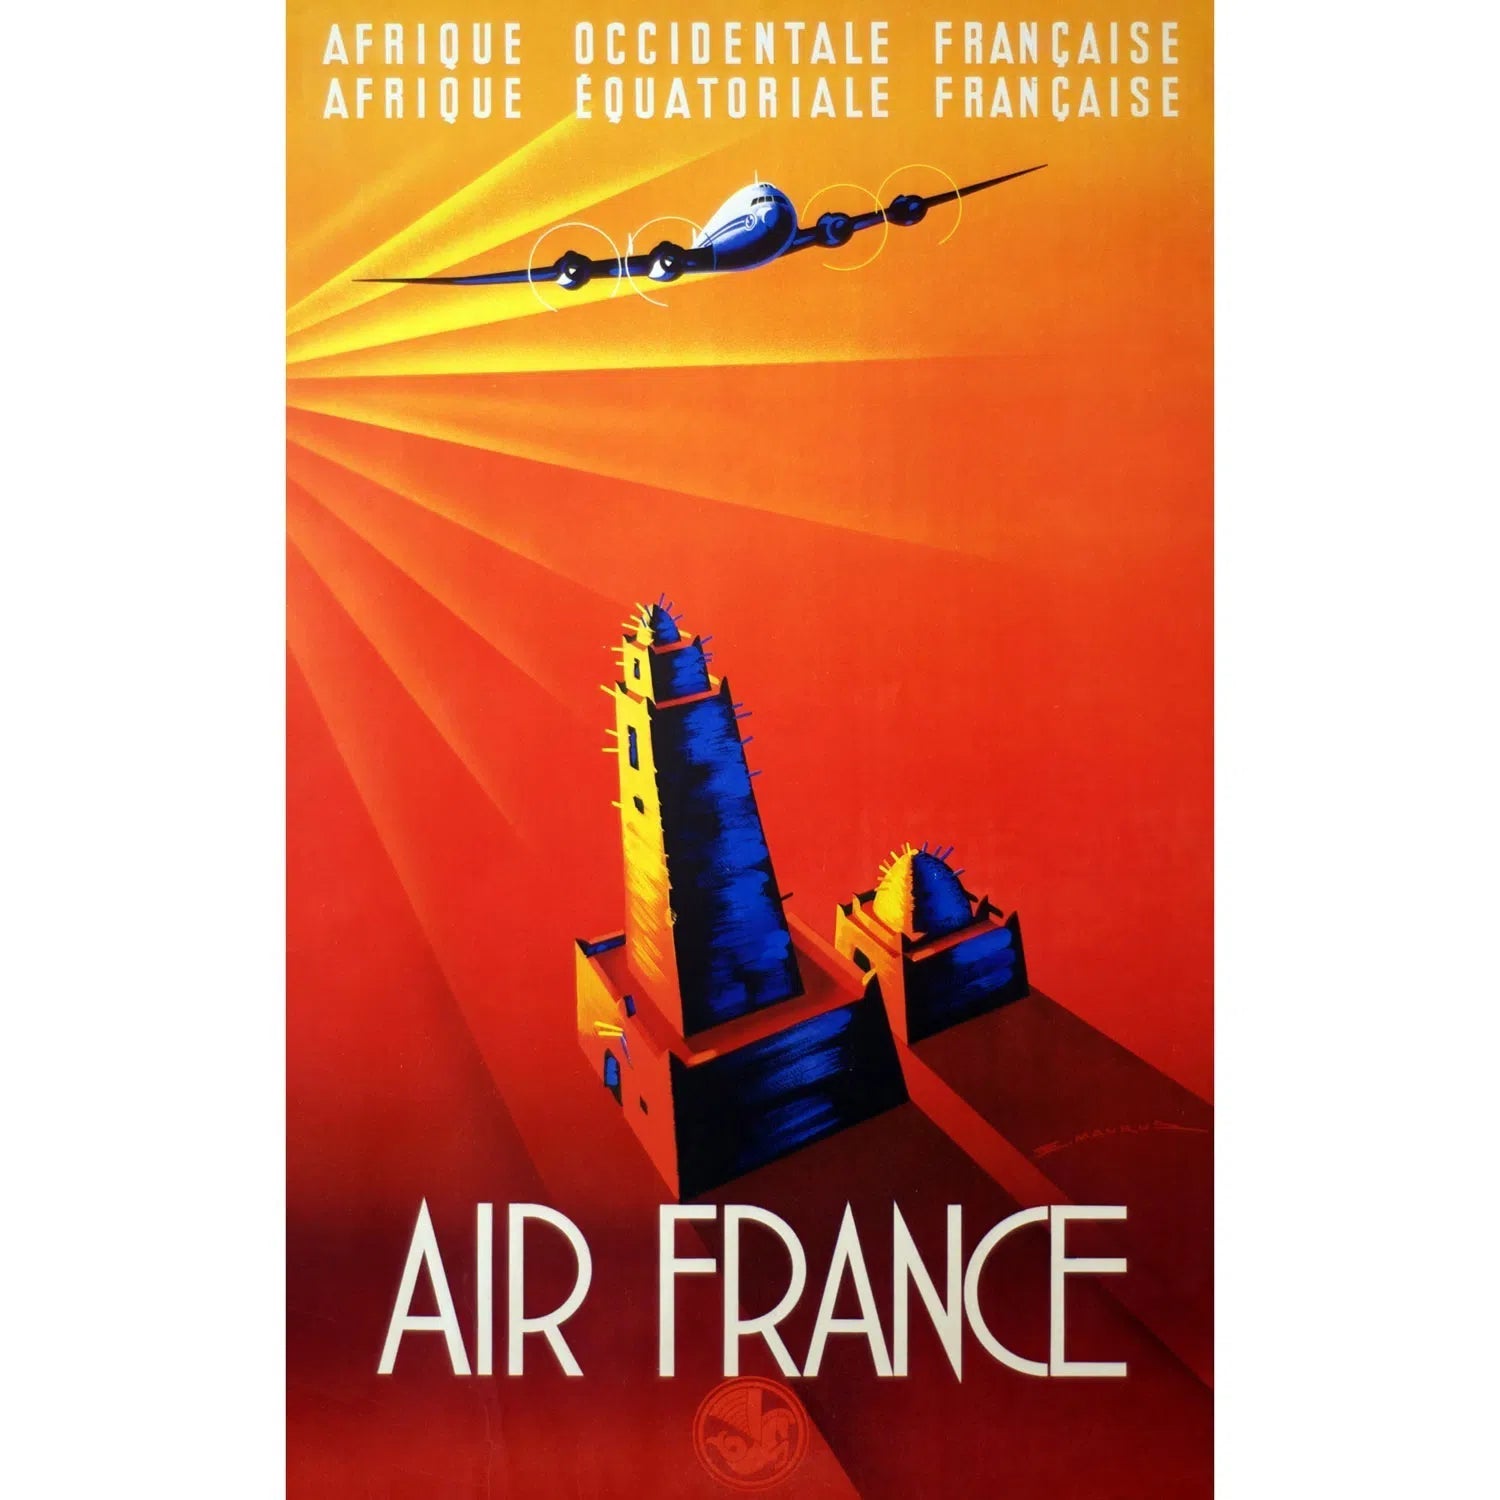 Air France - Afrique Occidentale Française-Imagesdartistes